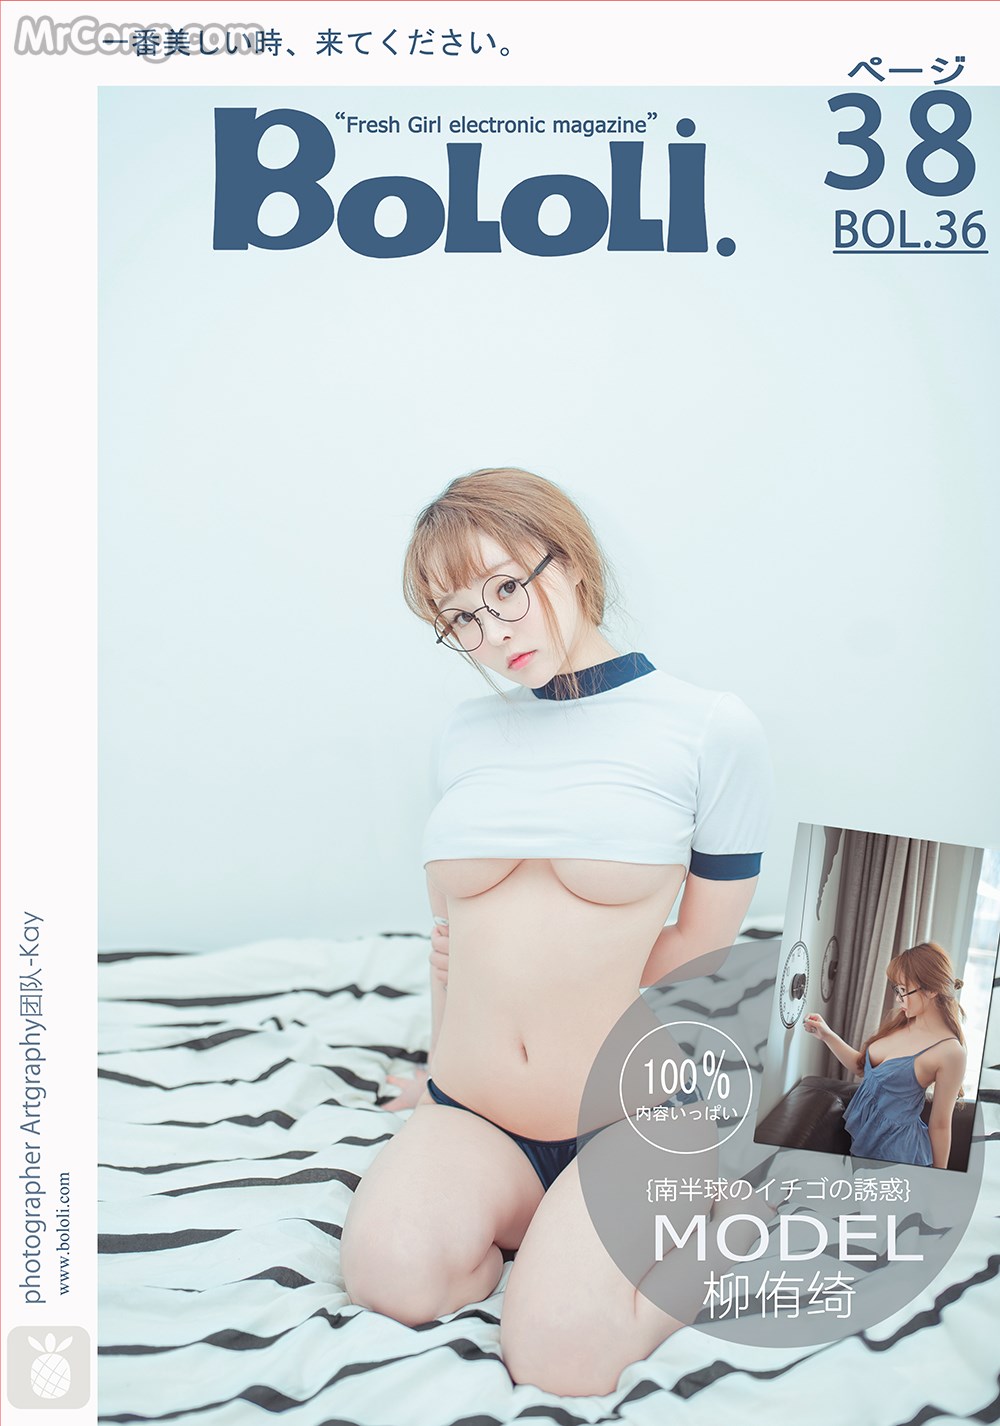 BoLoli 2017-03-25 Vol.036: Model Liu You Qi Sevenbaby (柳 侑 绮 Sevenbaby) (39 photos) photo 1-0